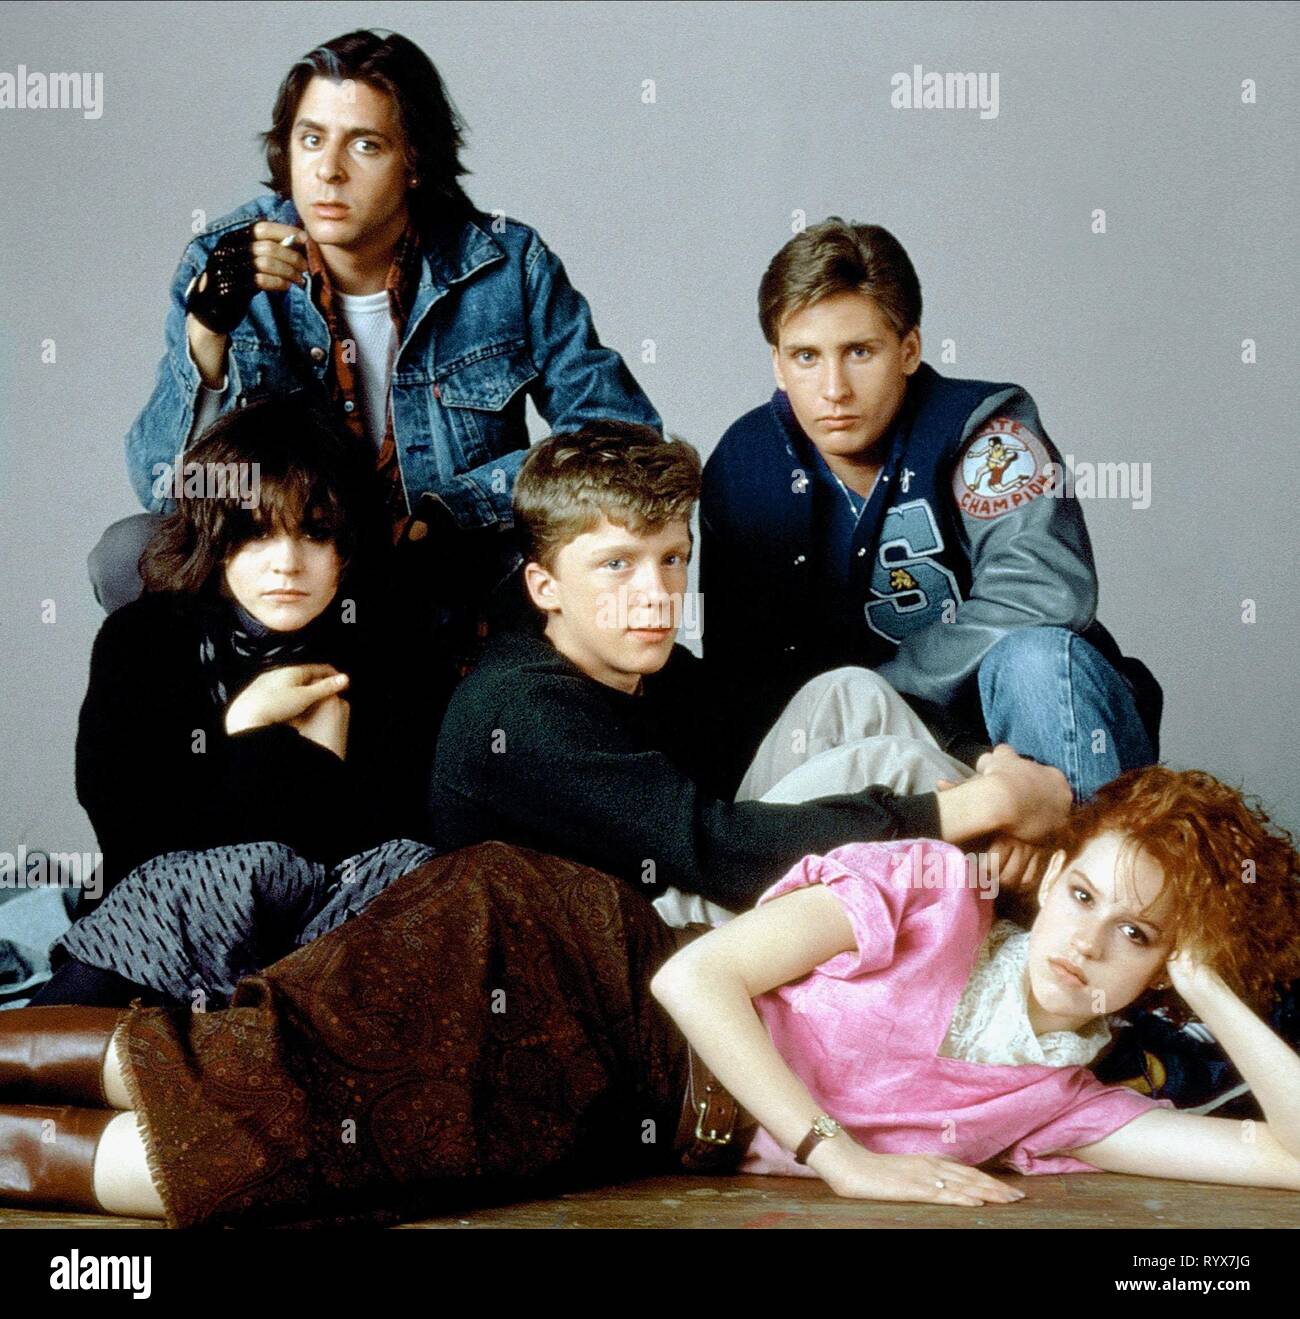 JUDD NELSON, alleato Sheedy, Anthony Michael HALL, Emilio Estevez,Molly Ringwald, BREAKFAST CLUB, 1985 Foto Stock